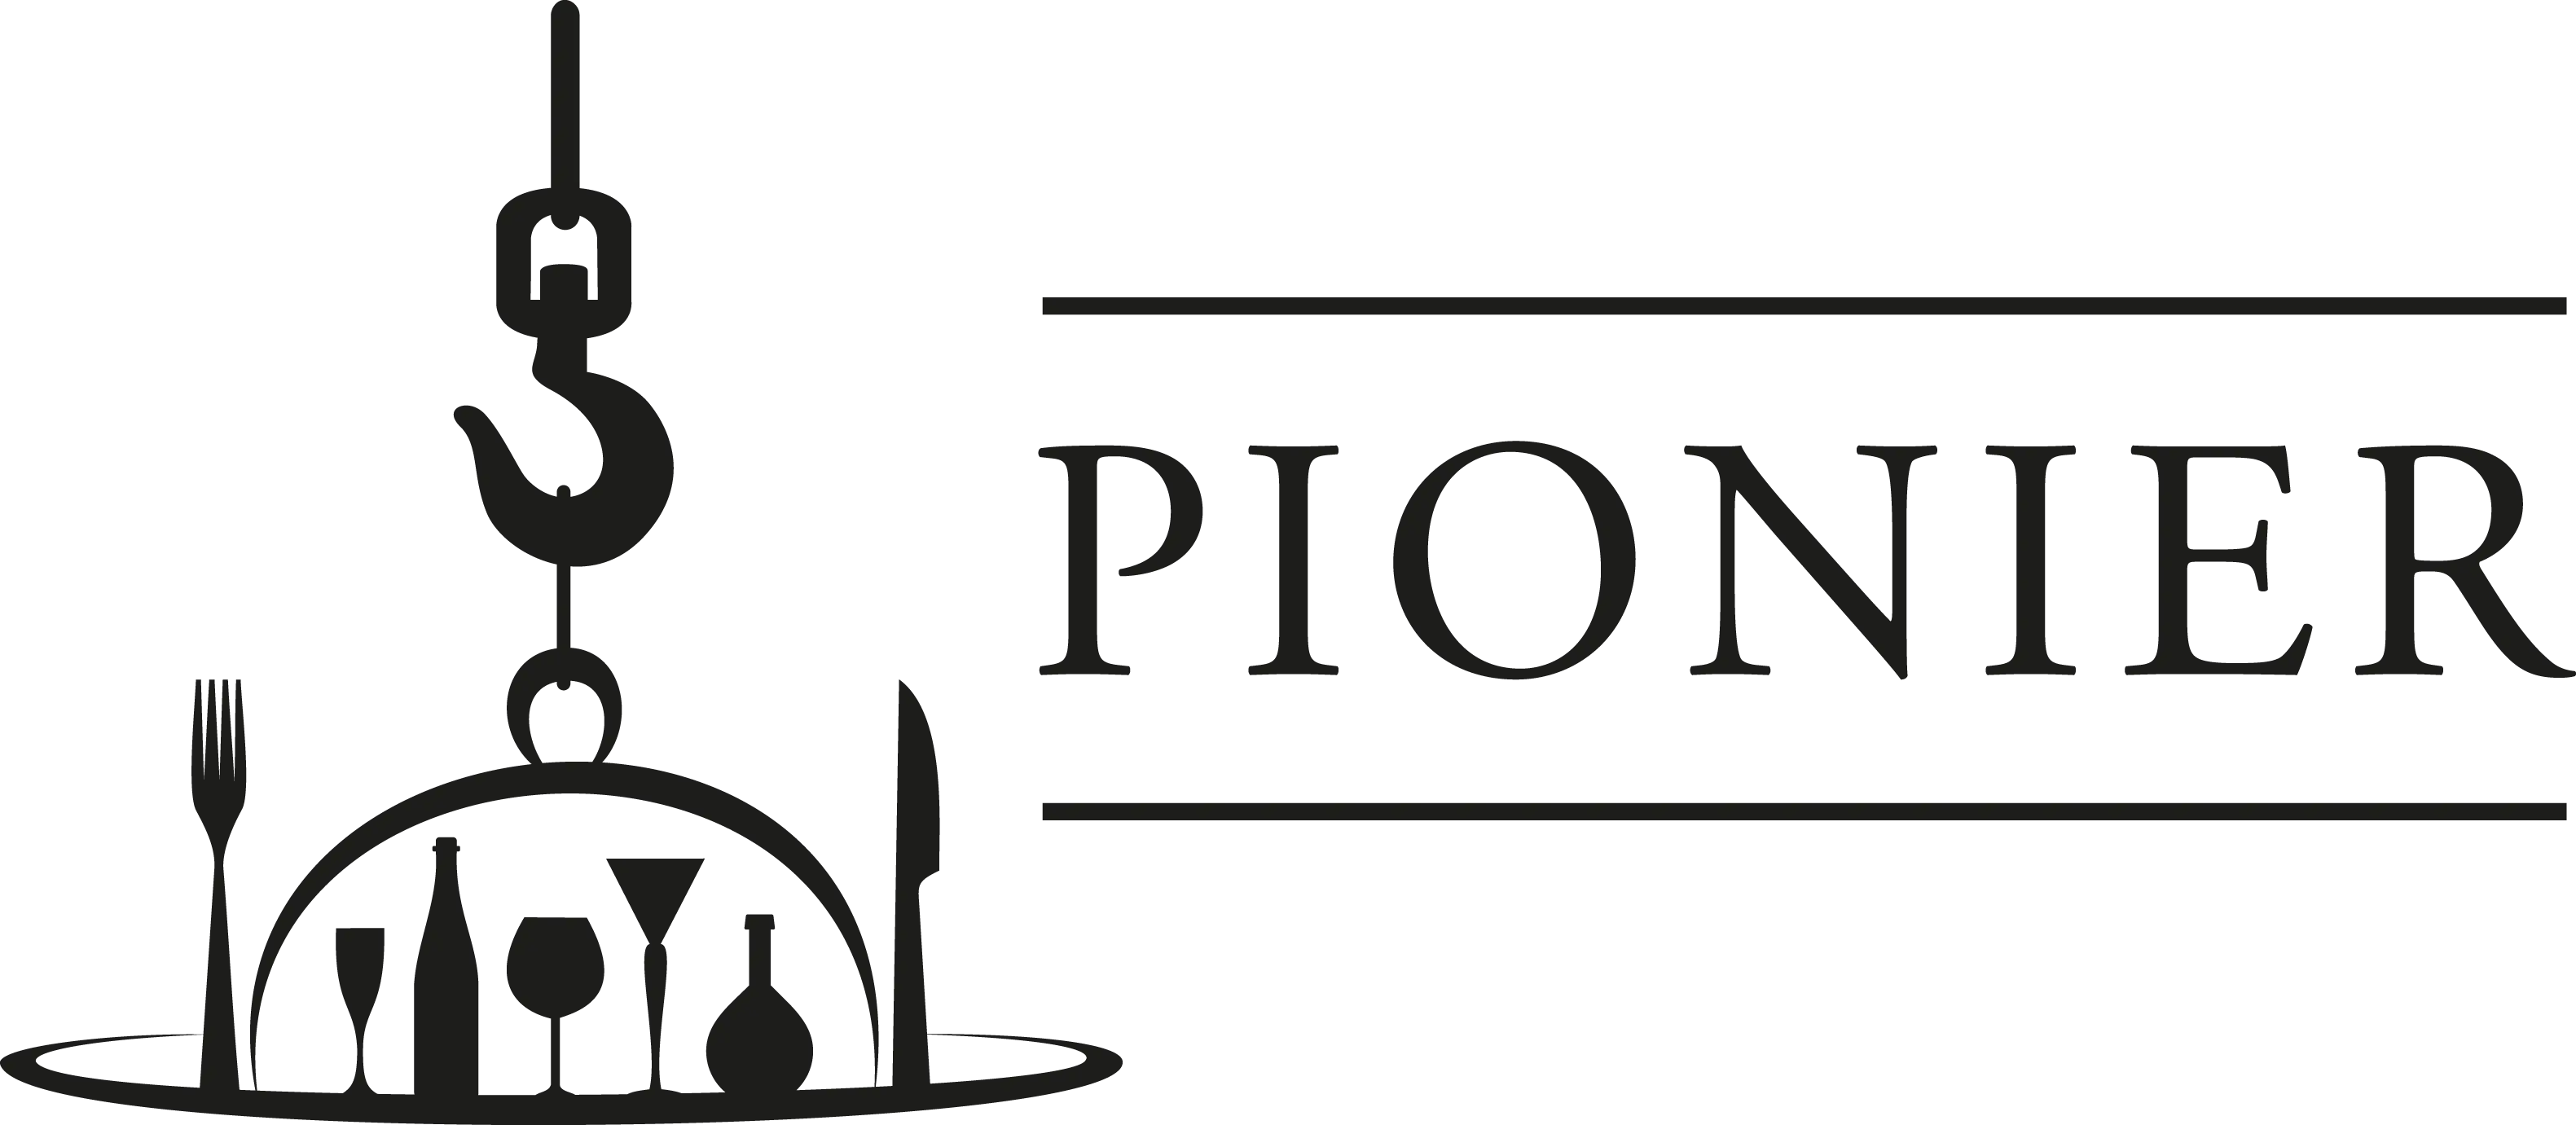 Pionier Catering Logo